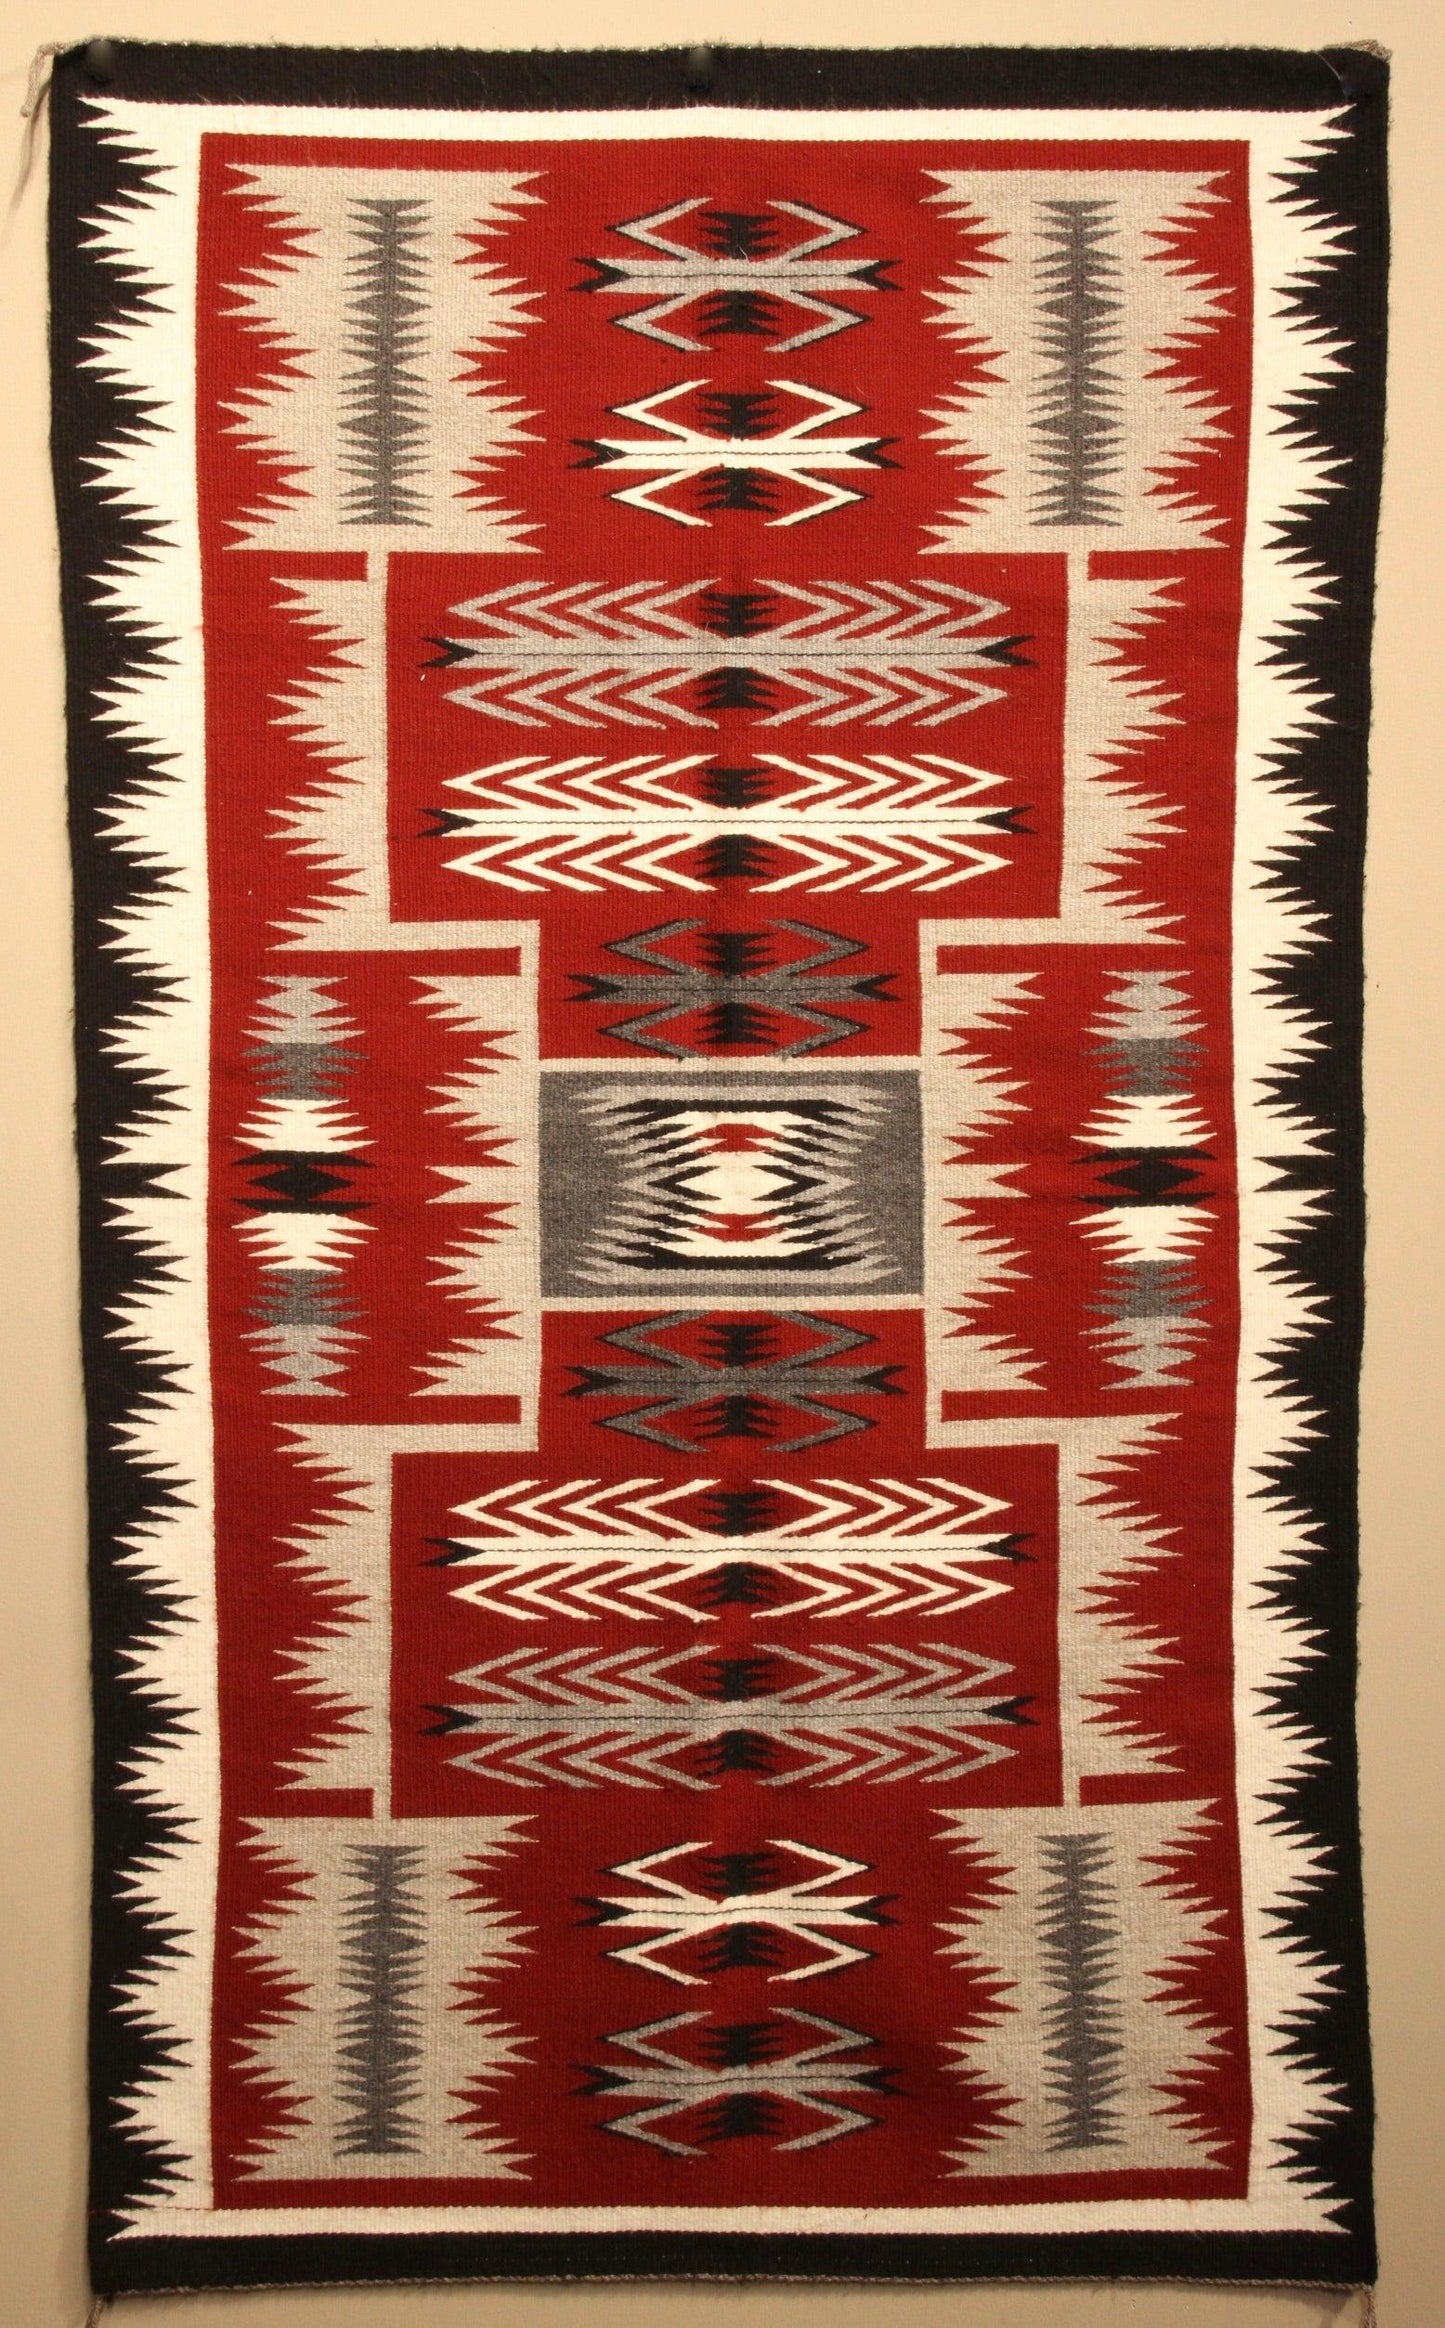 Storm by Weaver Anthony Tallboy-Weaving-Navajo Weaving-Sorrel Sky Gallery